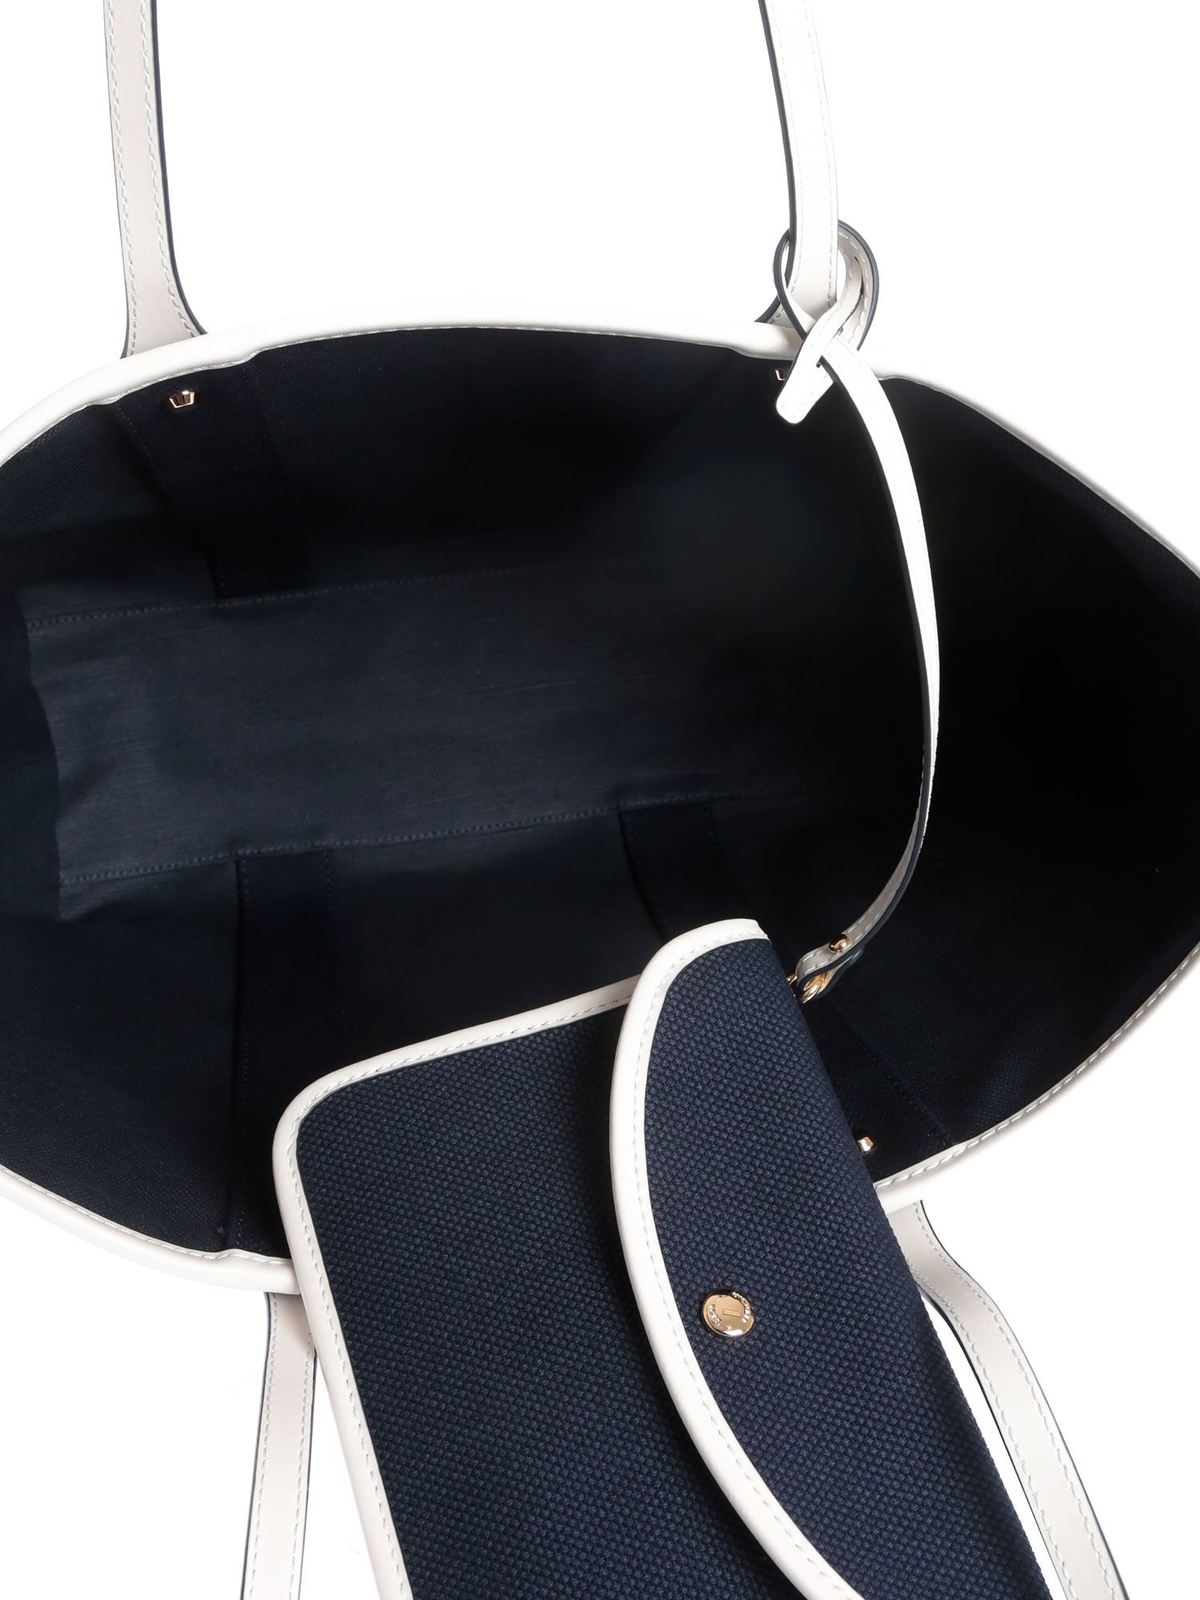 Buy the Michael Kors Navy Blue Canvas Top Handle Bag